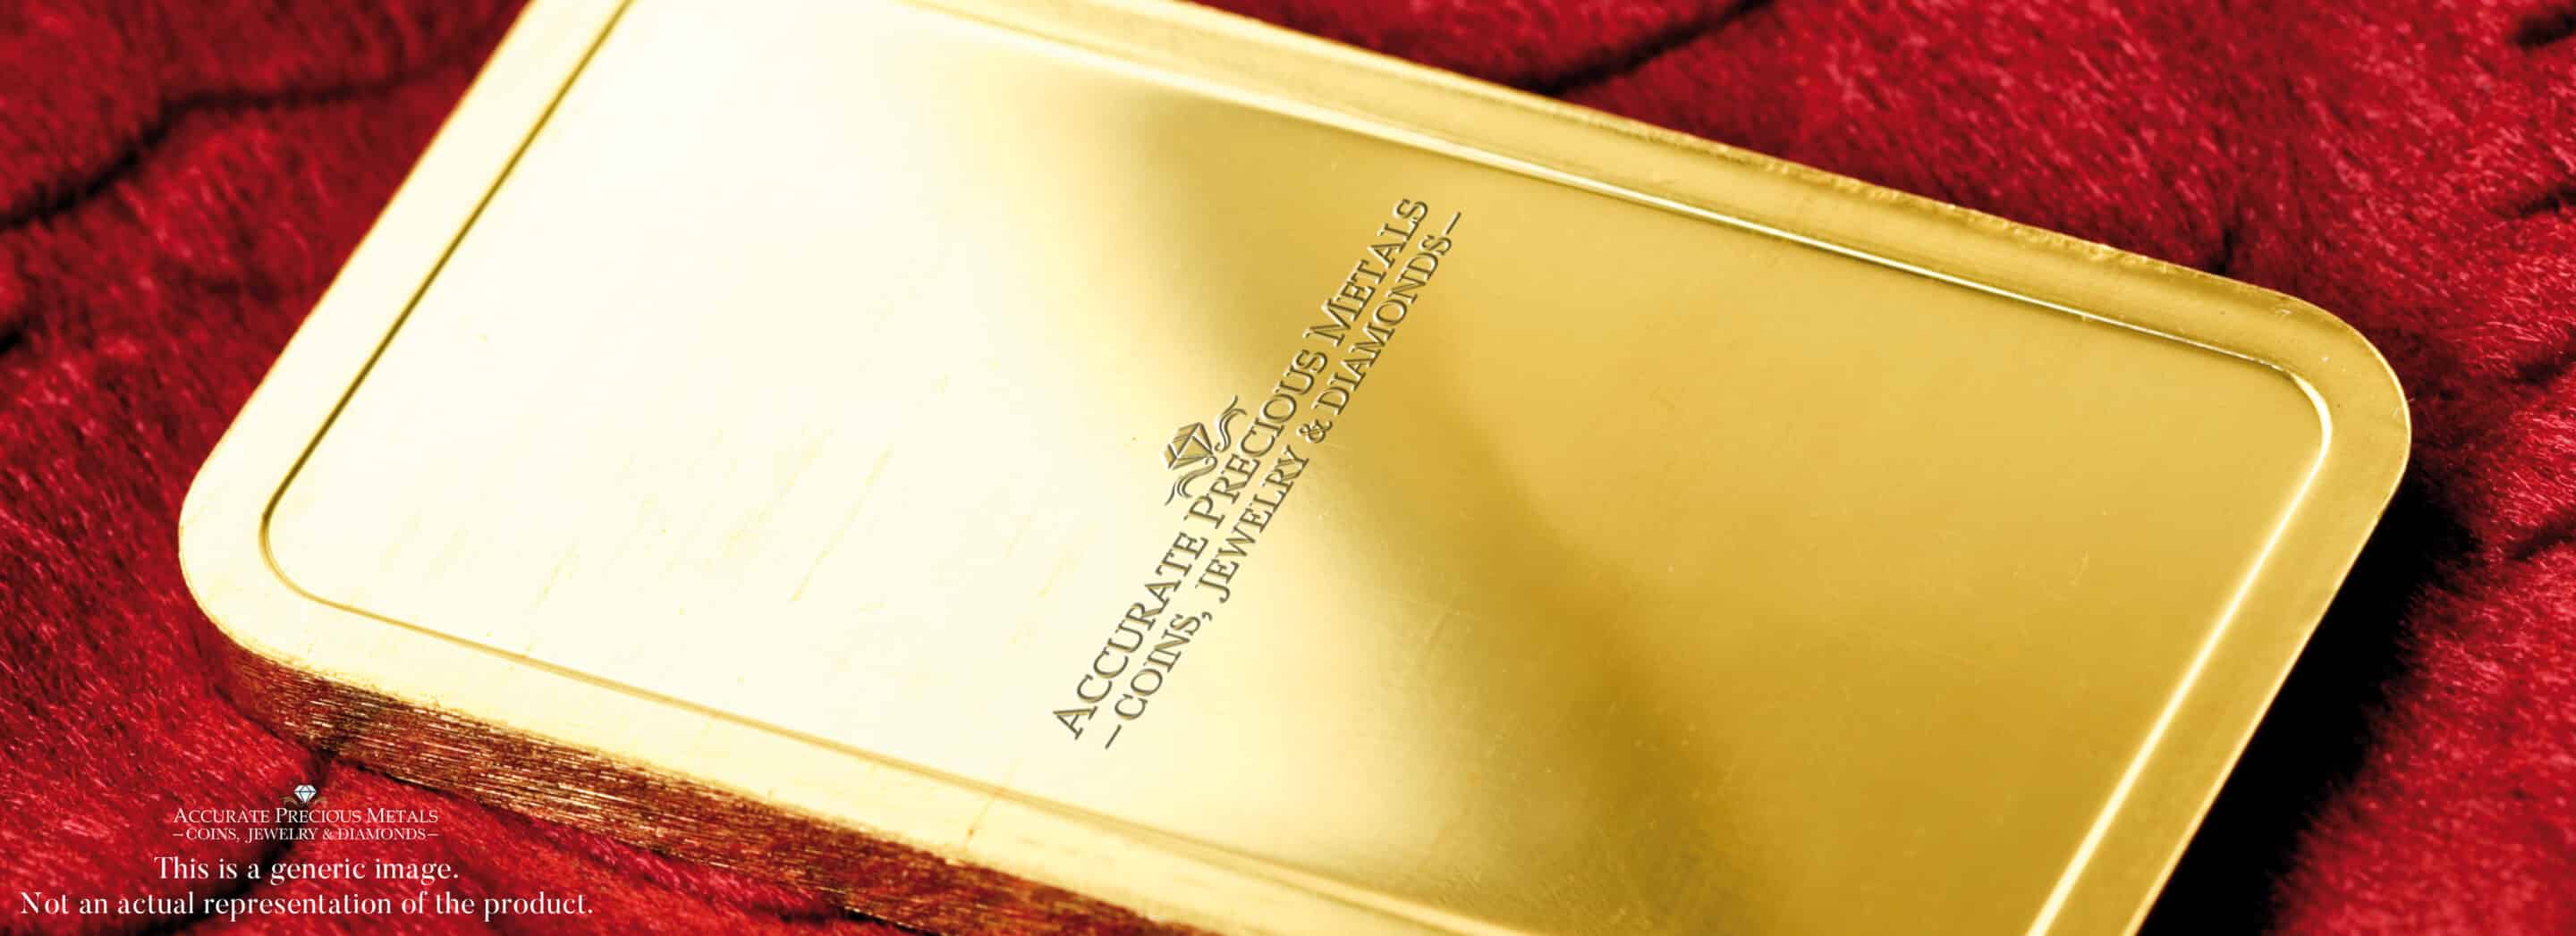 Shining Asahi Refining 1/10 oz Gold Bar - Trusted Investment Choice